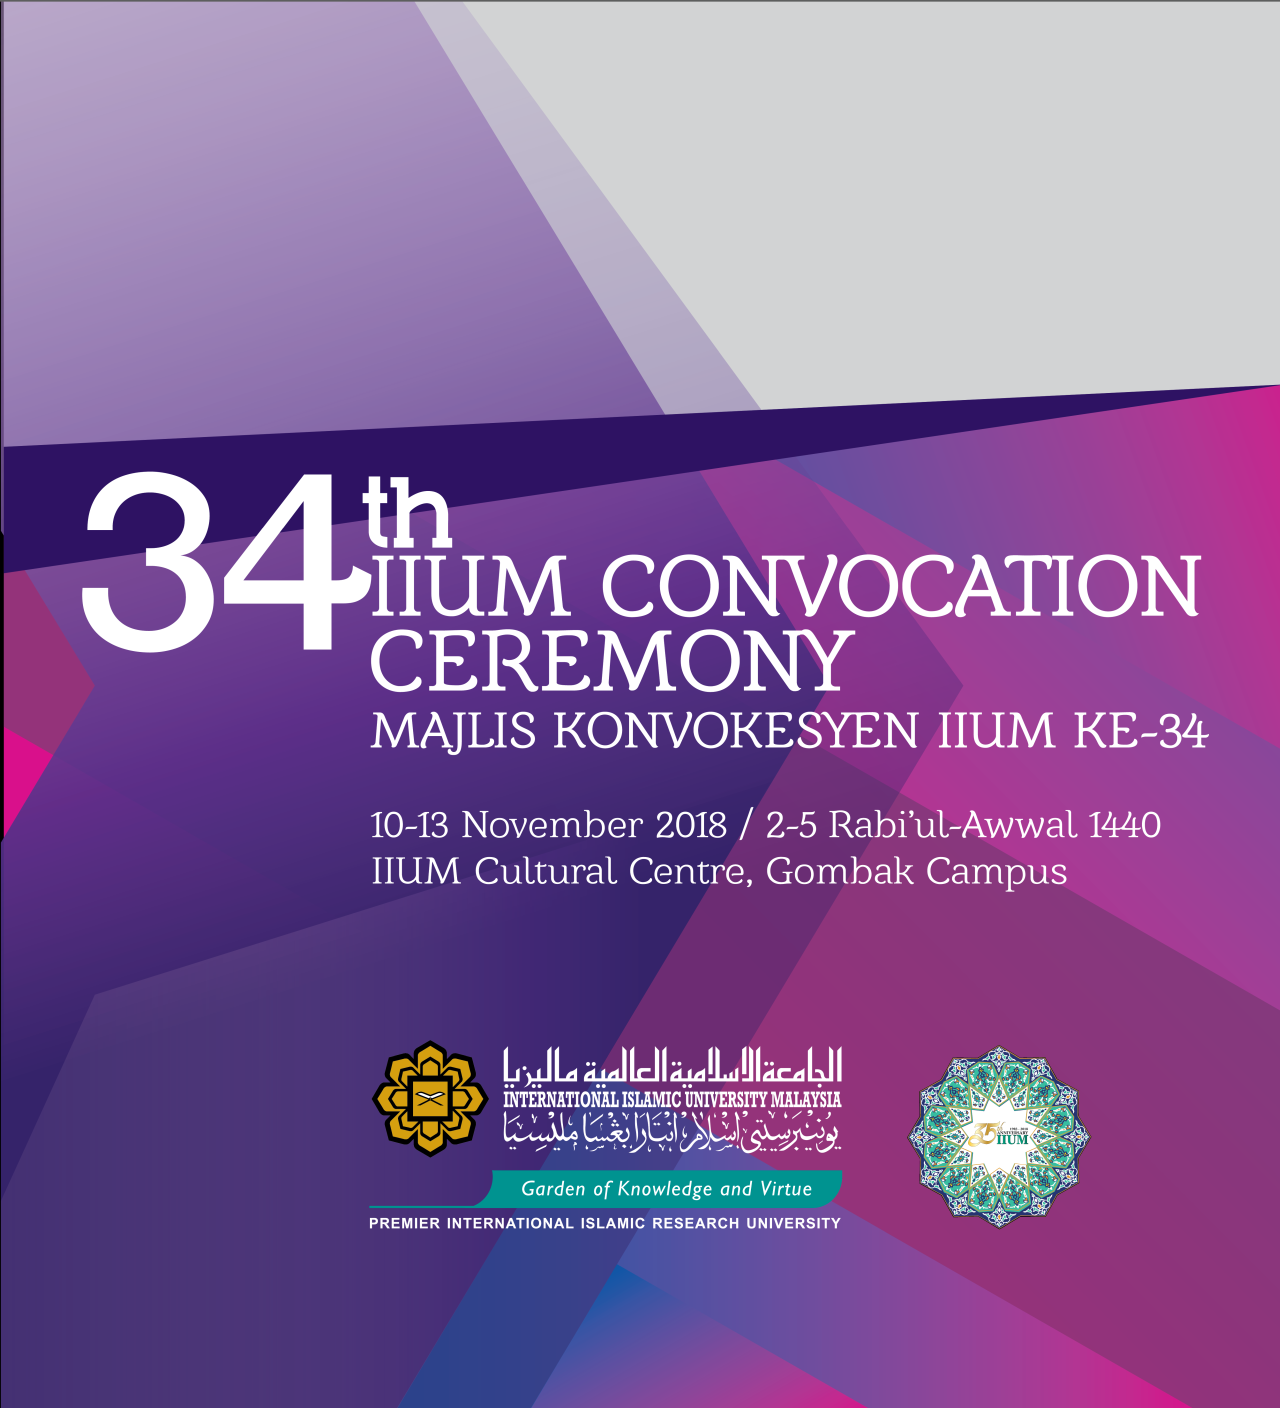 IIUM 34th Convocation